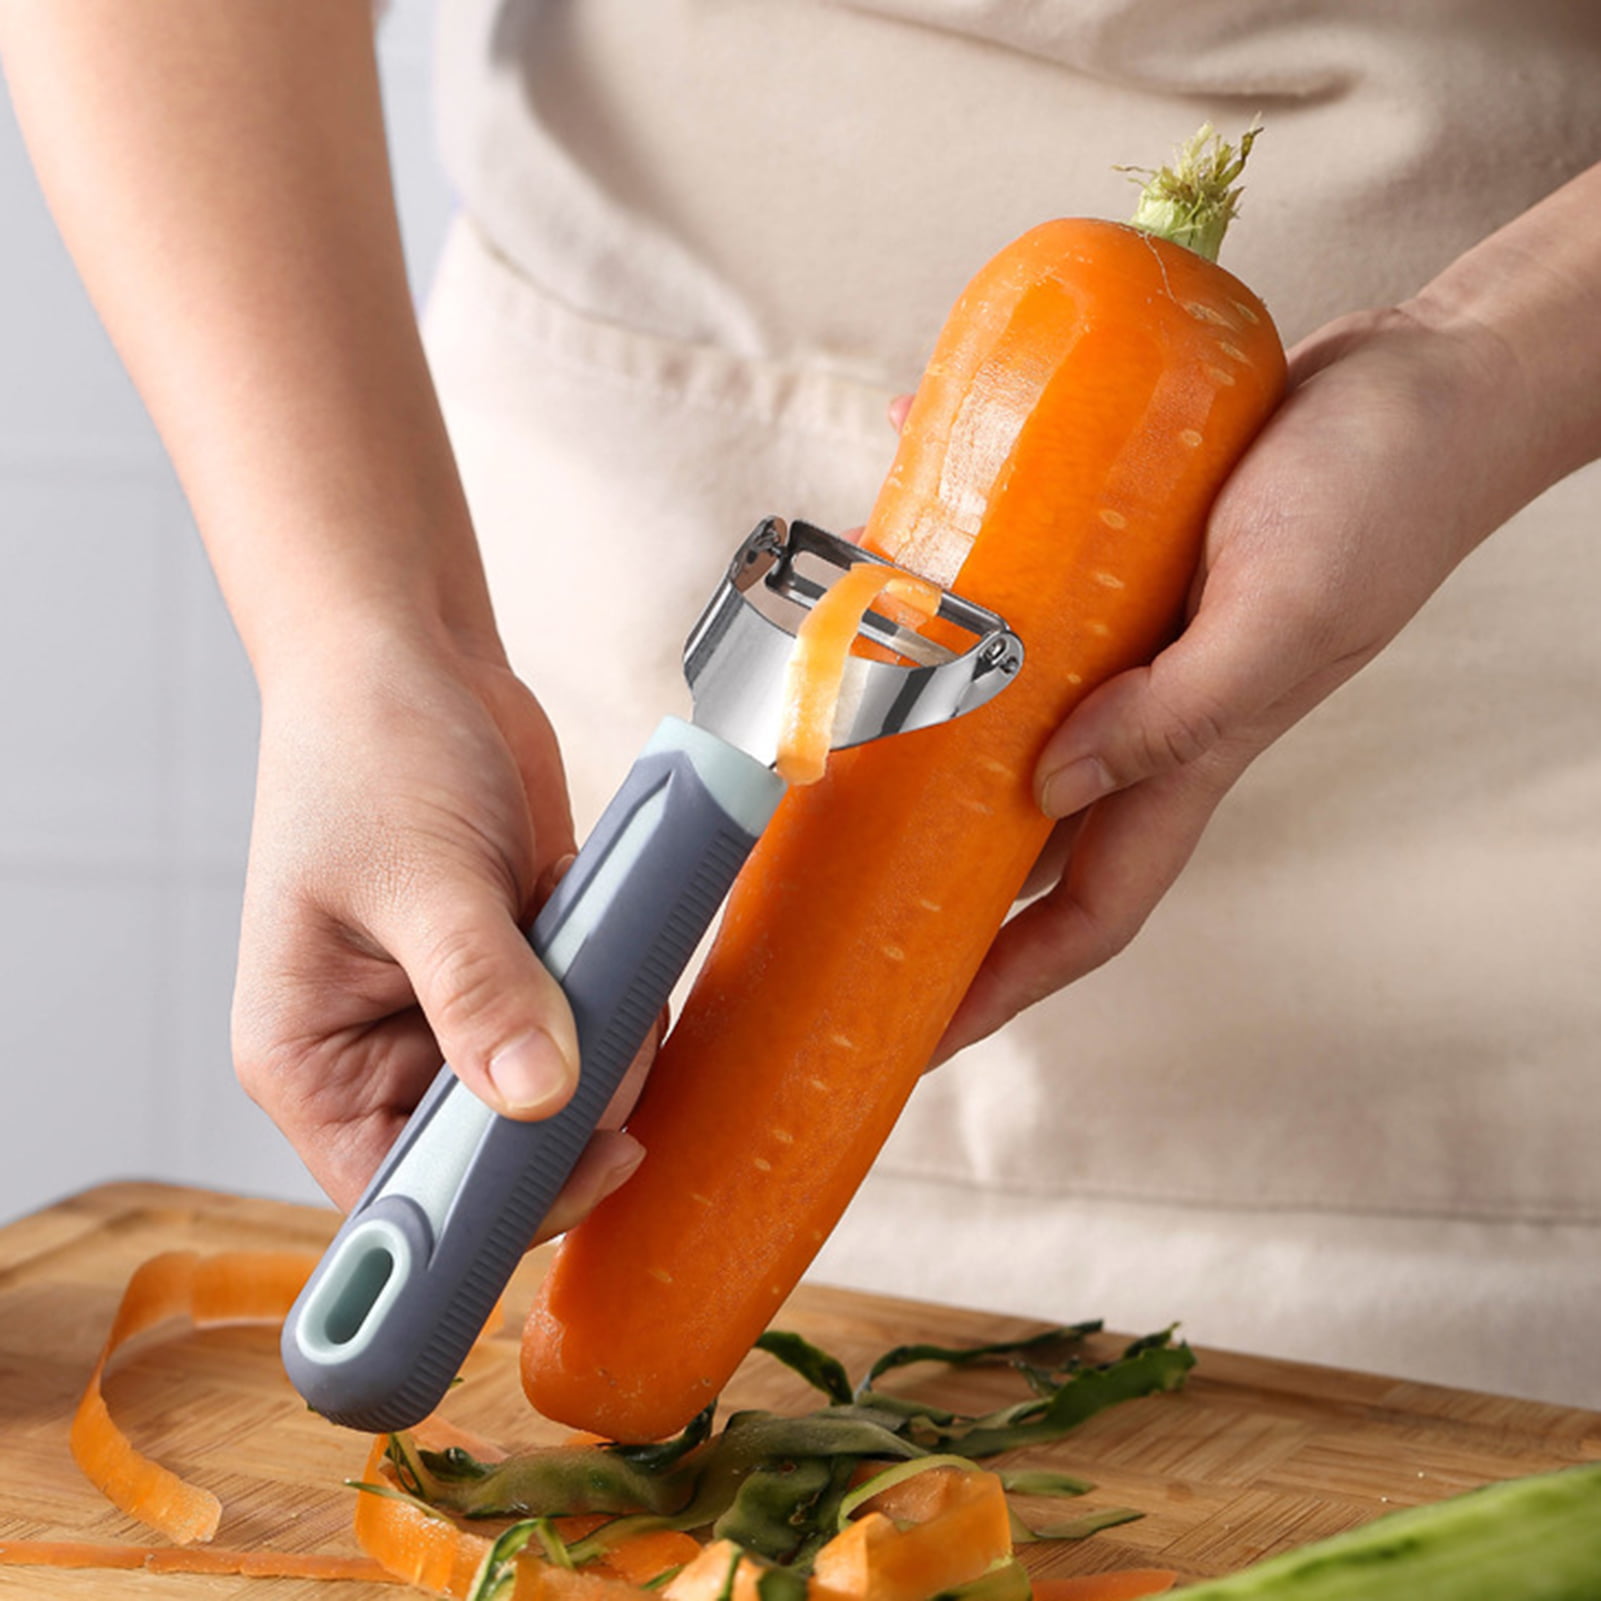 Details about   8-Blade Vegetable Fruit Slicer Spiralizer Kitchen Tools Cutter Easy Cooking US 